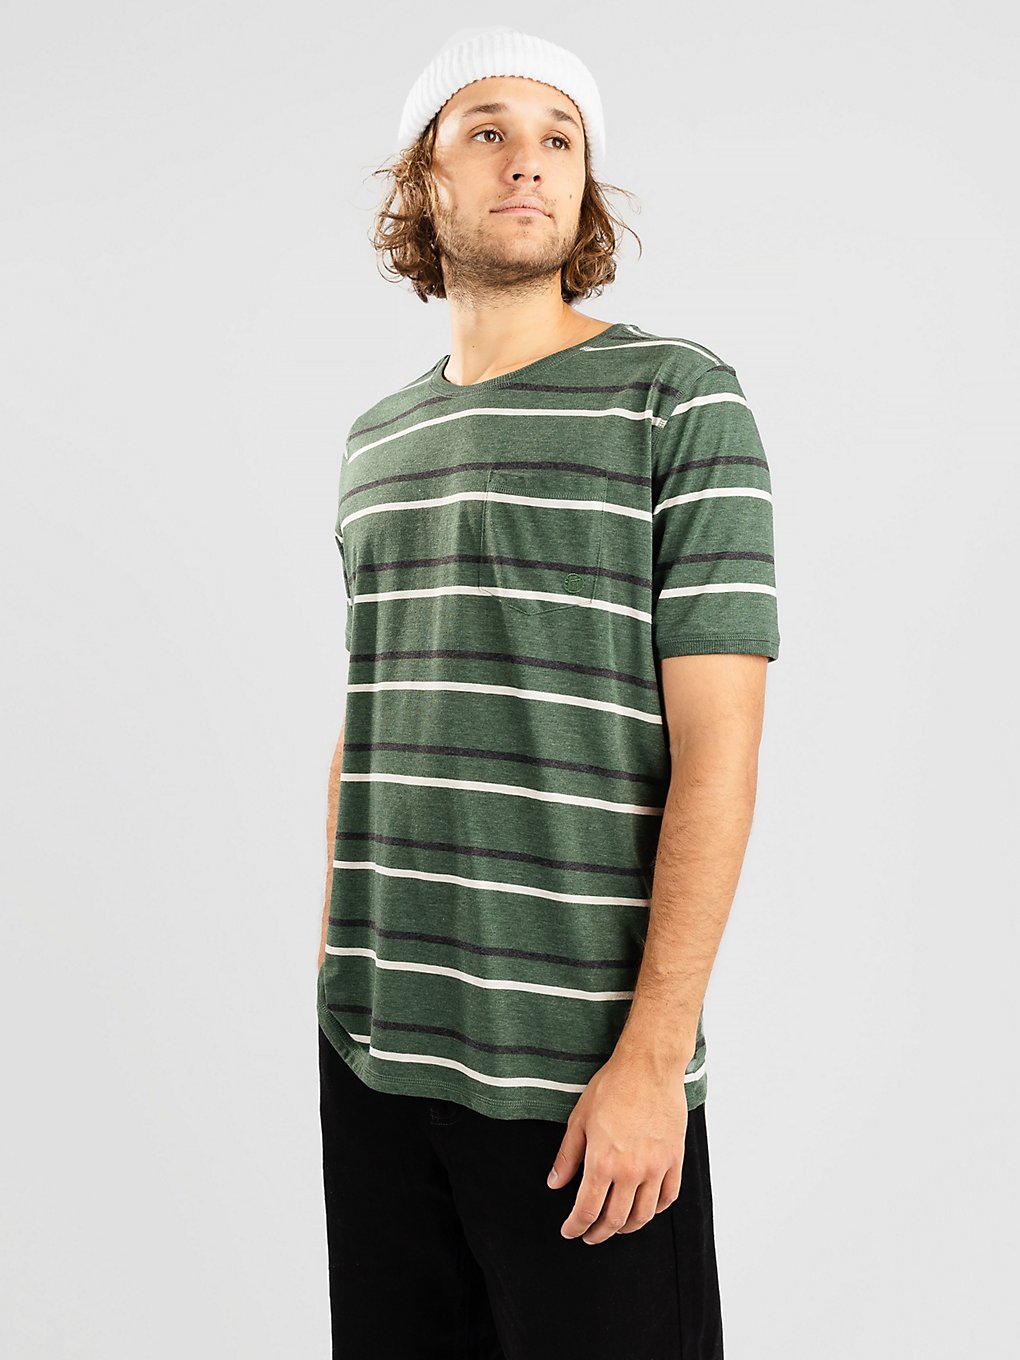 Kazane Moss Stripe T-Shirt groen